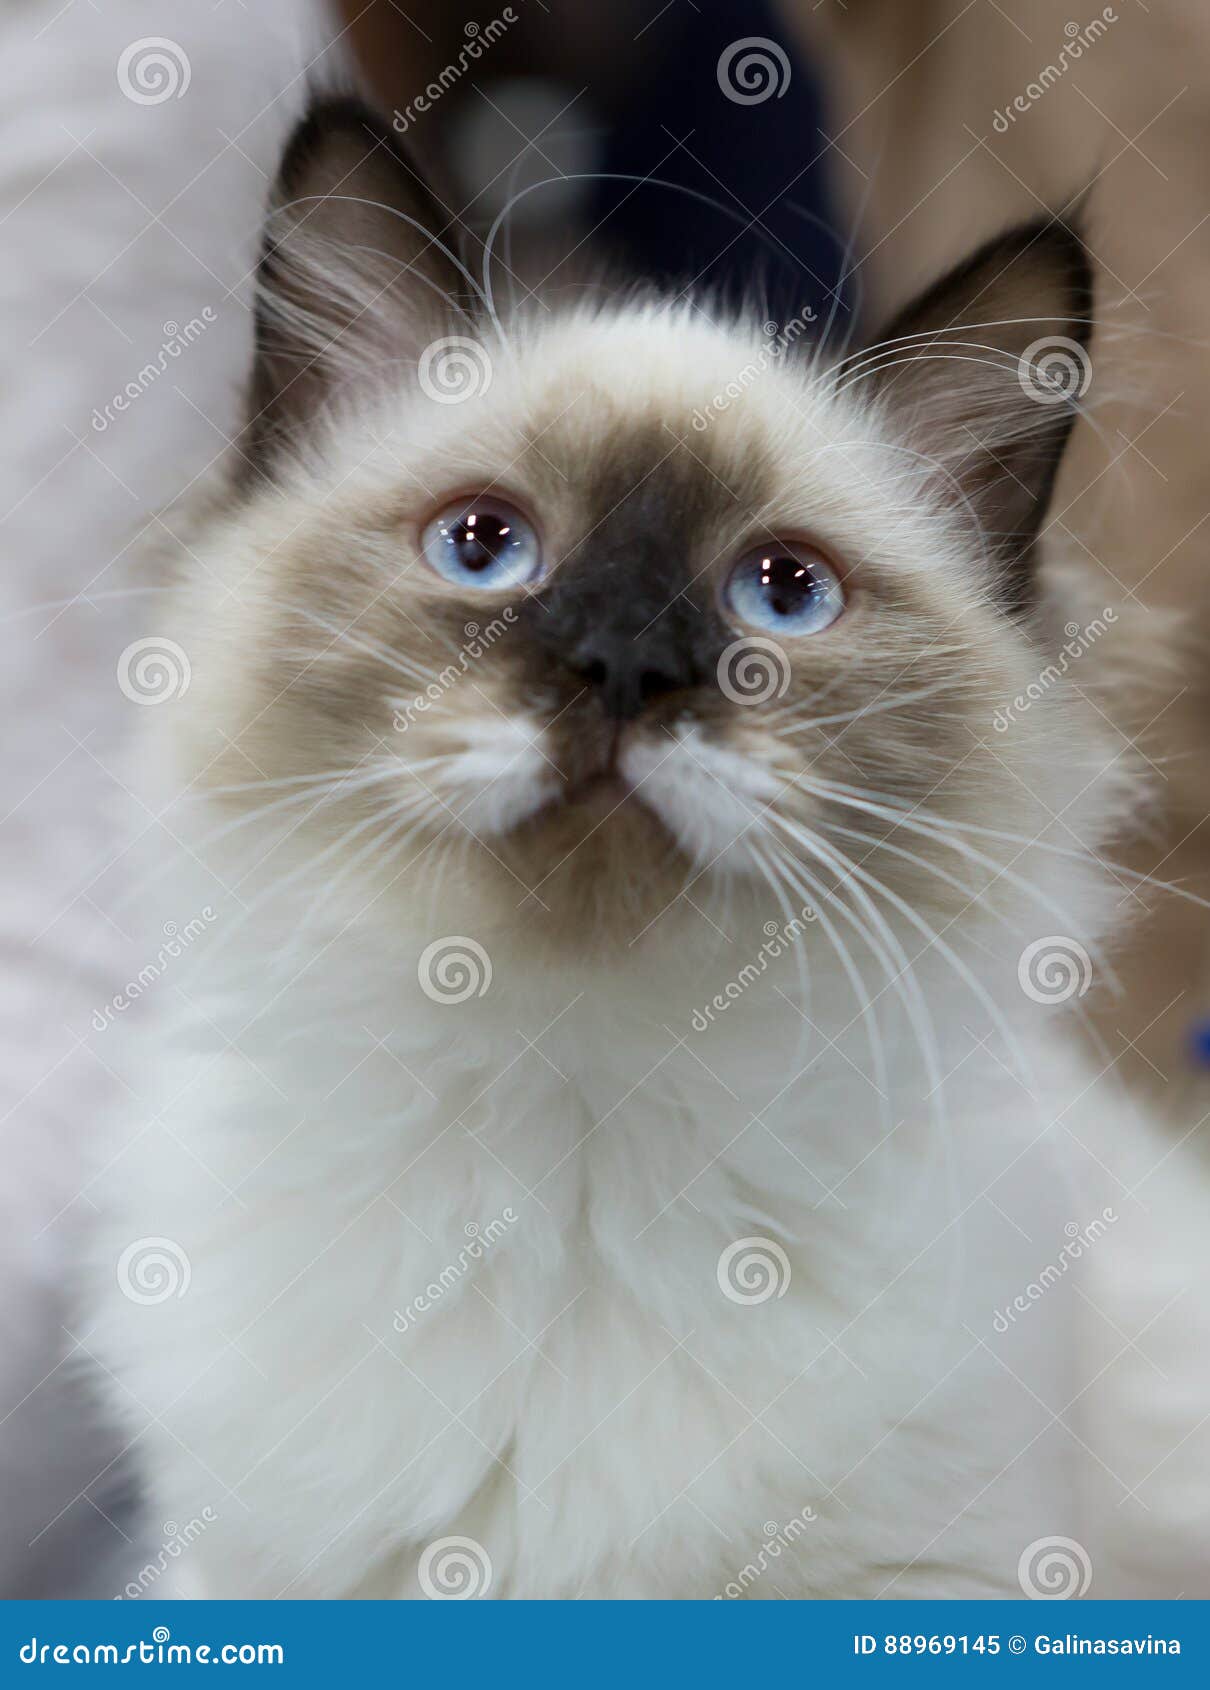 Cat Breed Siberian Neva Masquerade Stock Image Image Of Eyes Companion 88969145